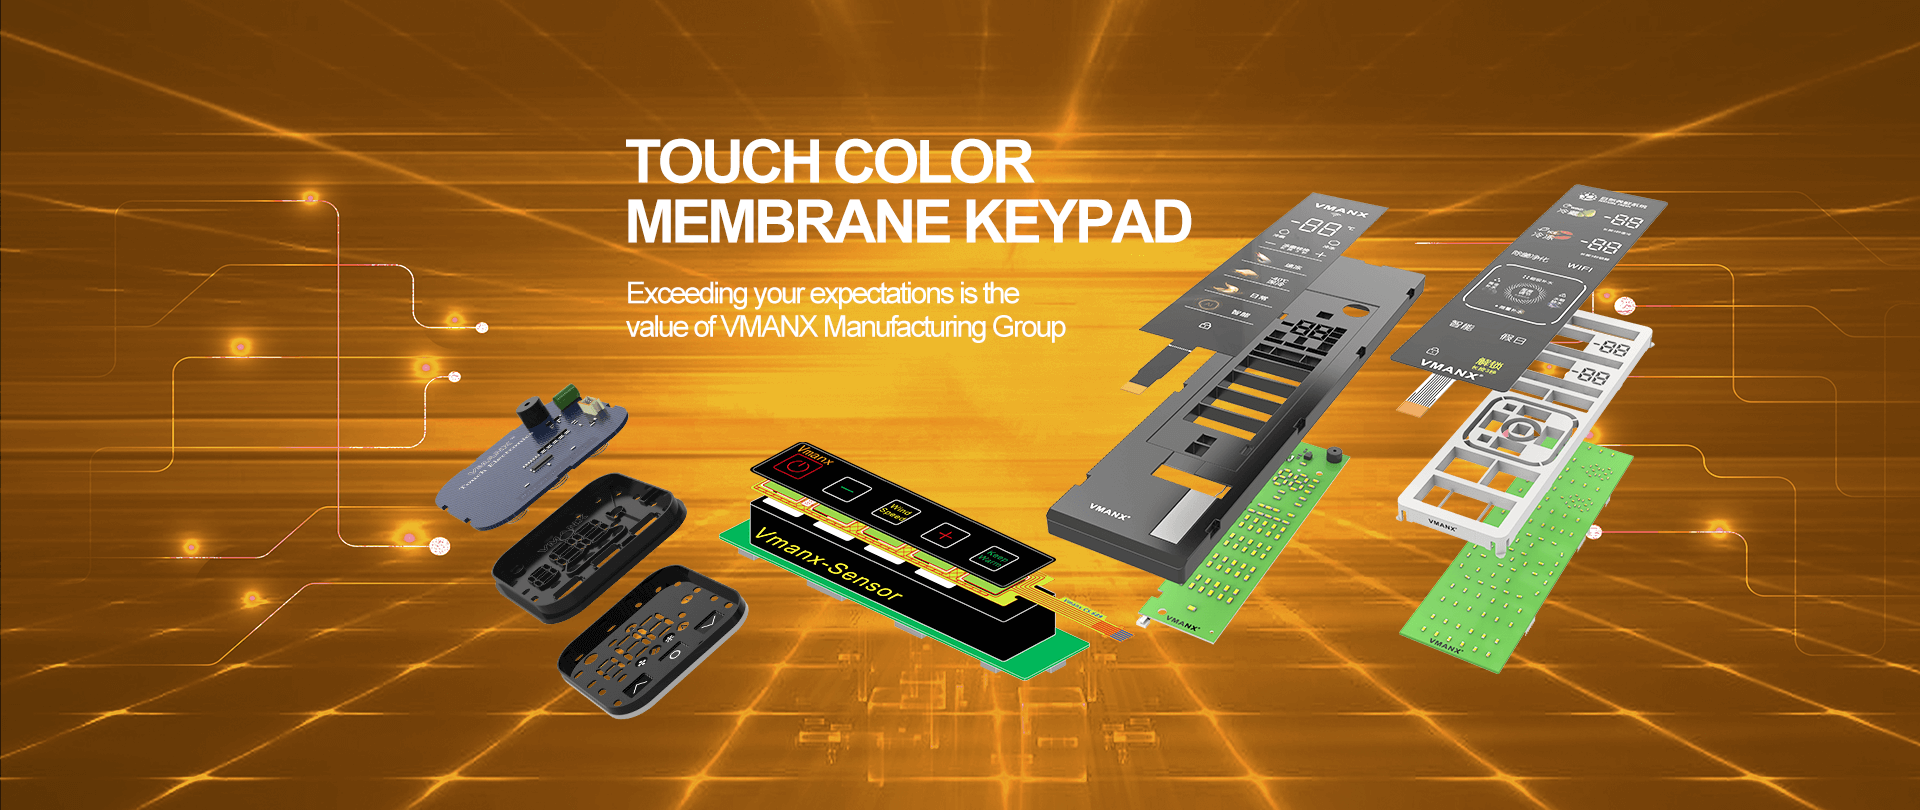 Touch color membrane keypad